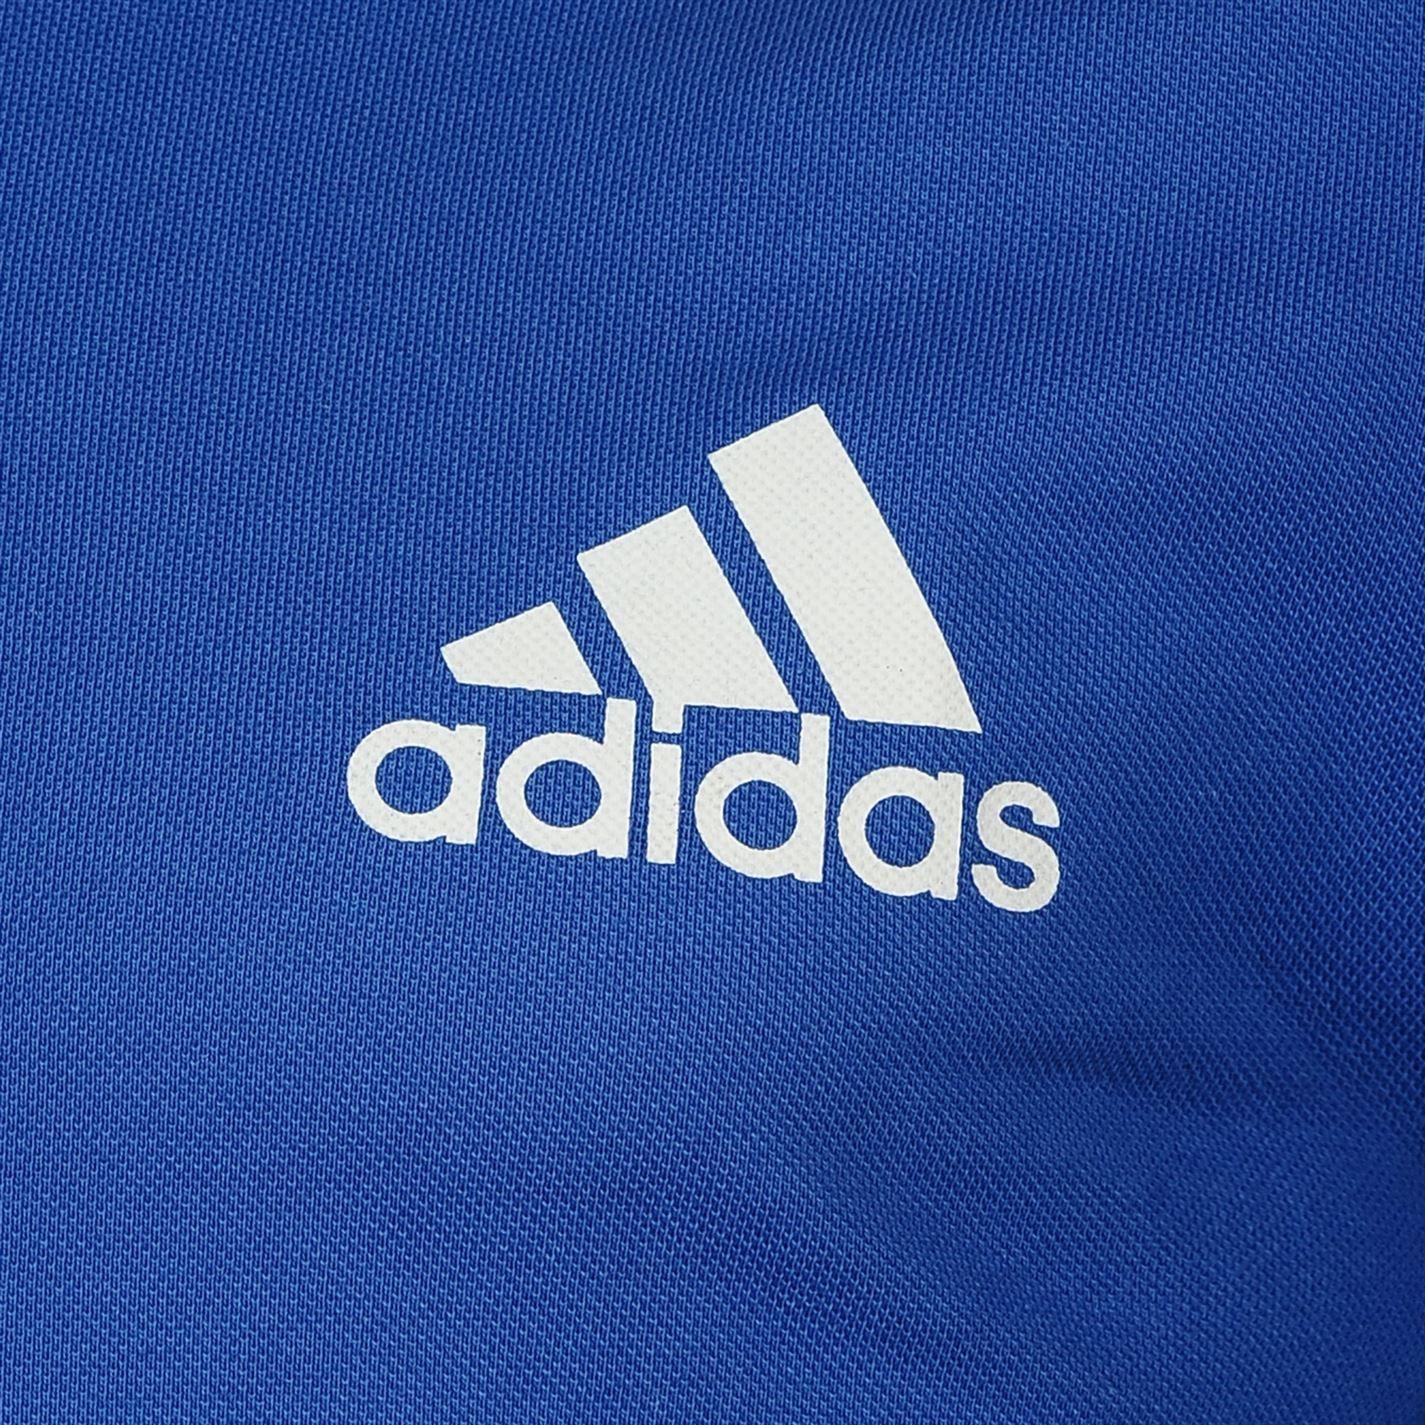 Blue and White Adidas Logo - Adidas 3 Stripes Logo Polo Shirt Mens Blue White Collared T Shirt